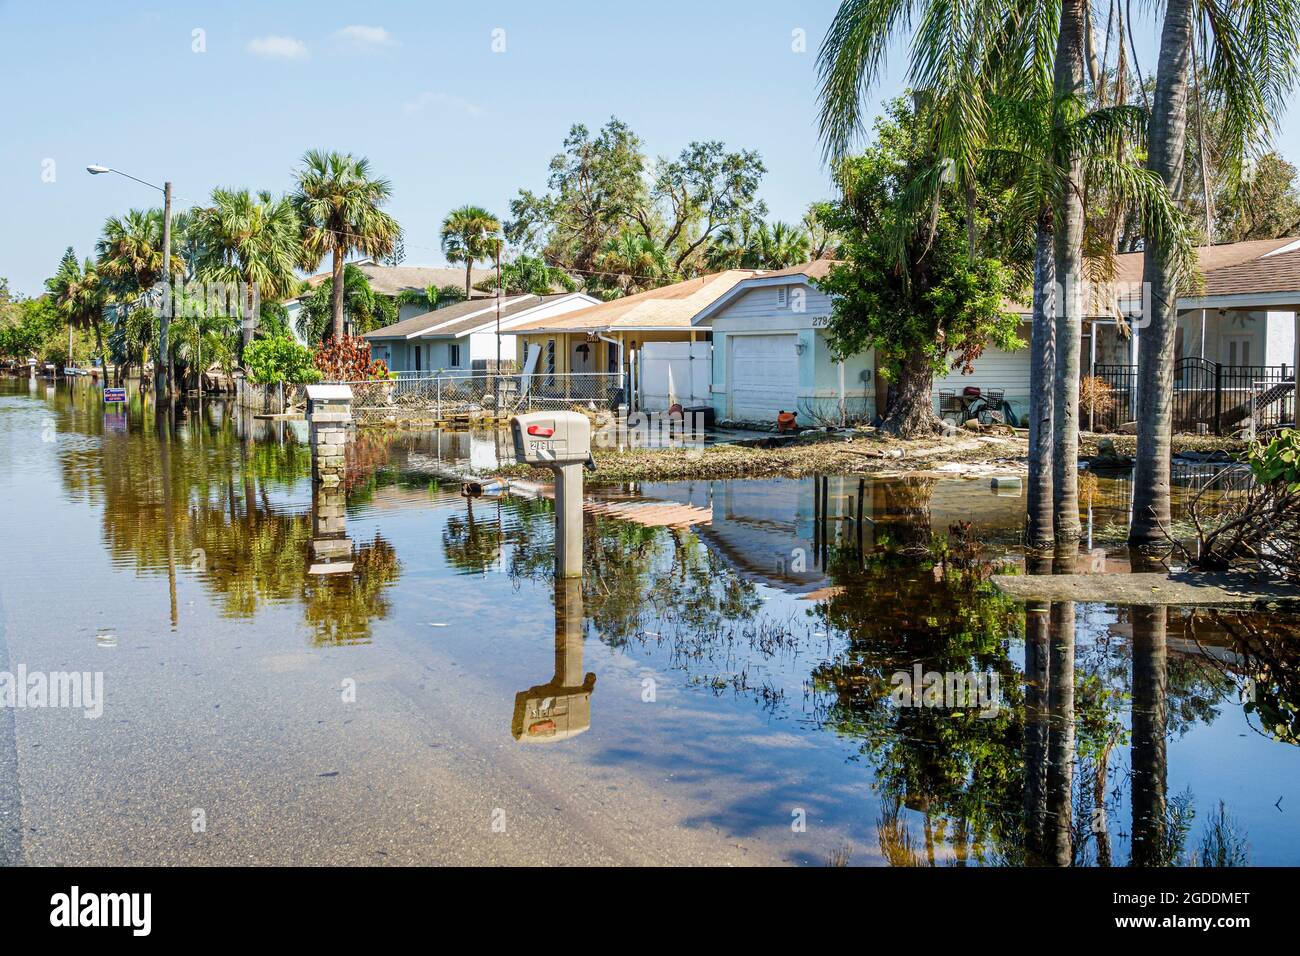 Bonita Springs Florida,after Hurricane Irma flooding flood,houses homes residences neighborhood stagnant water flooded street, Stock Photo